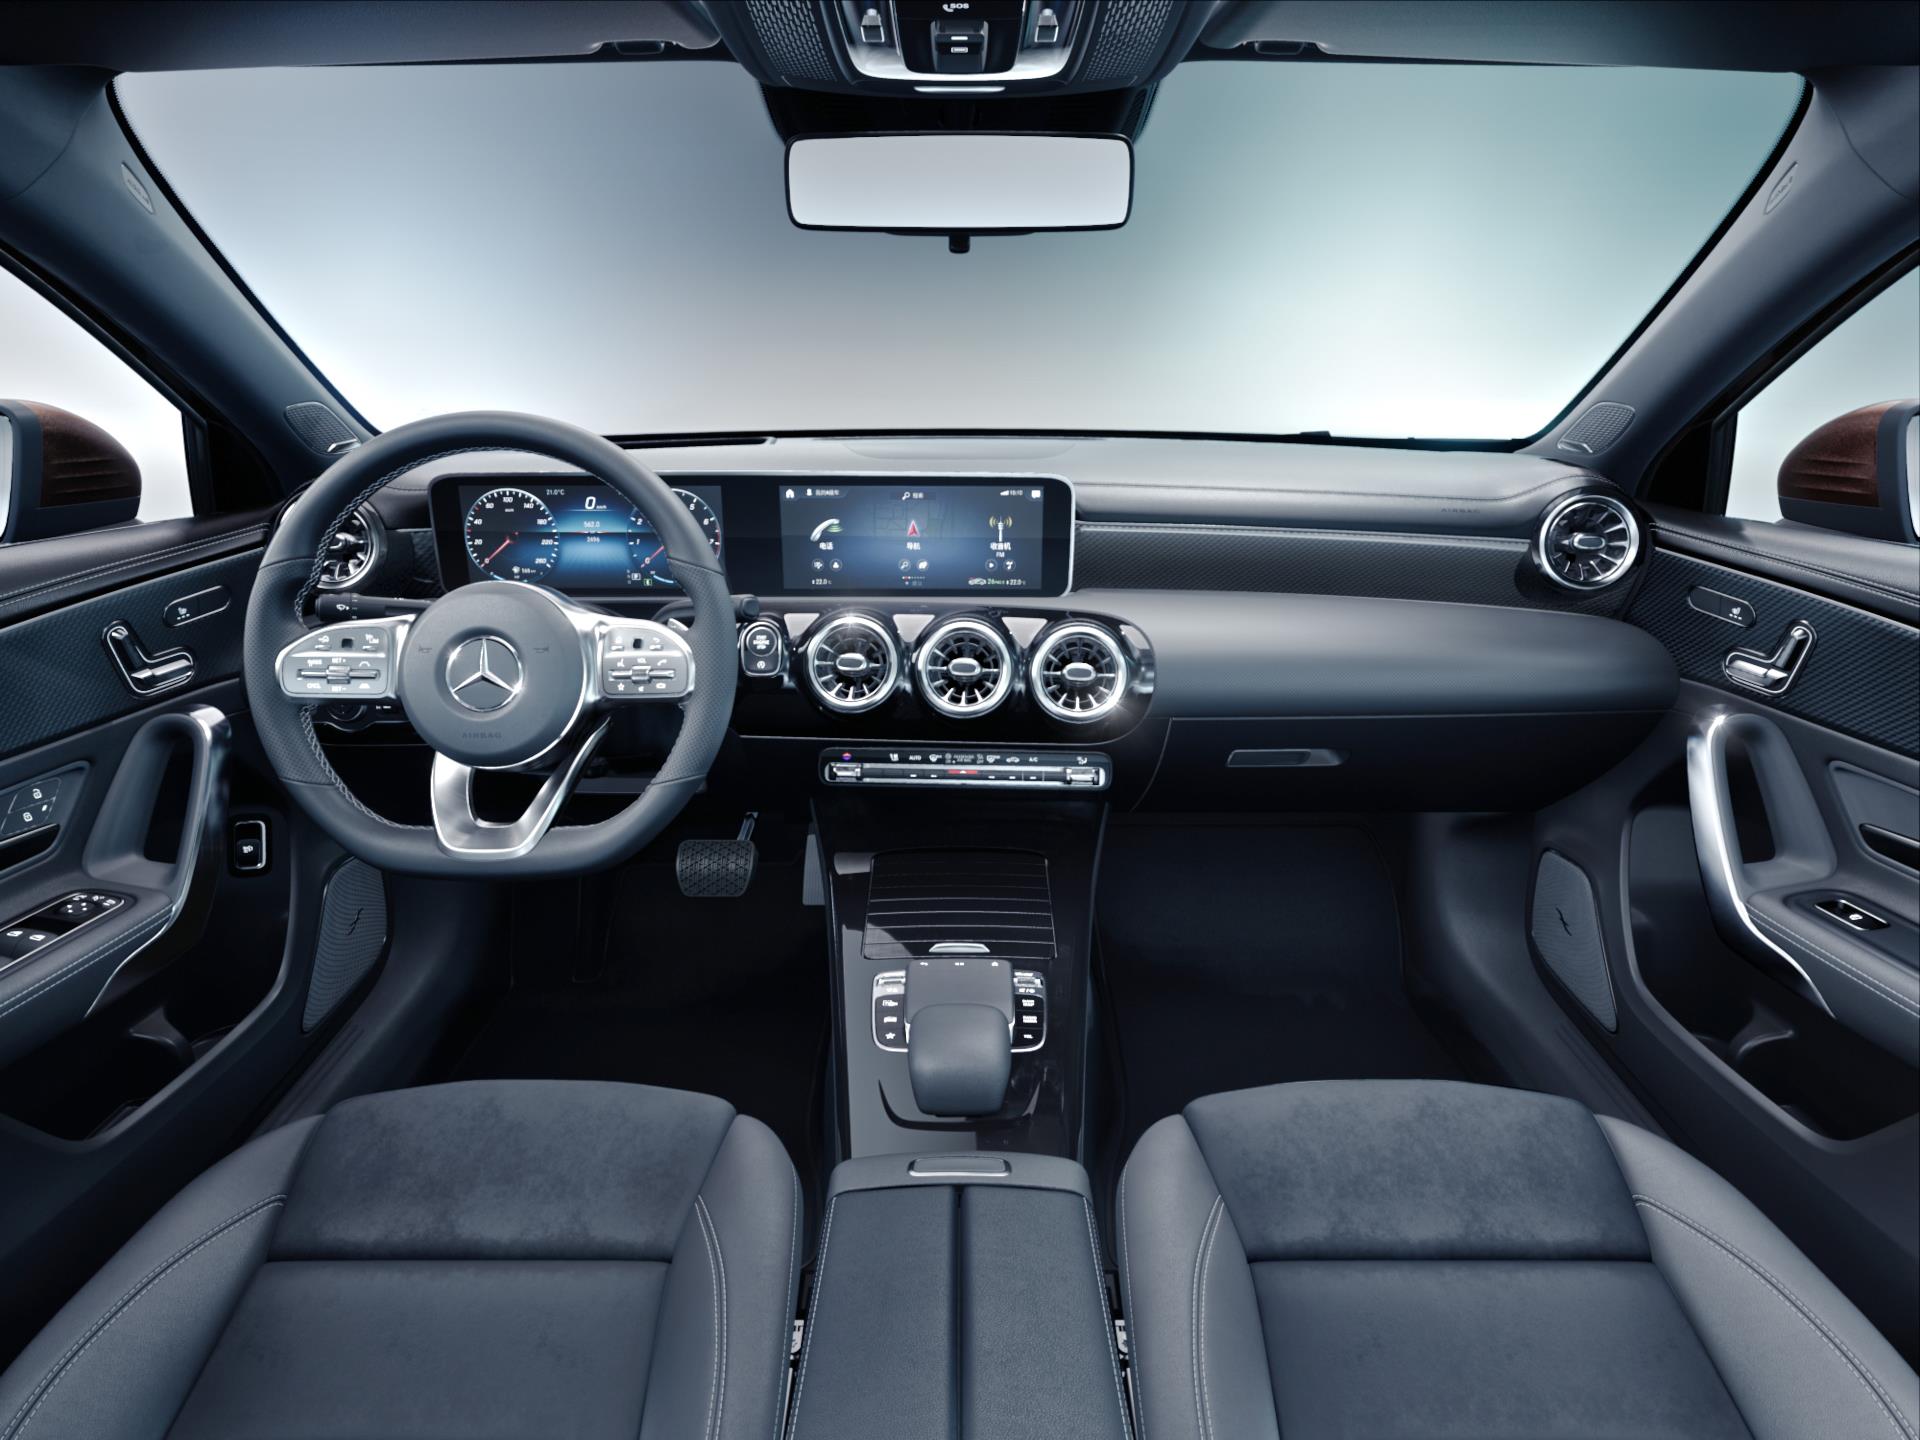 2019 Mercedes Benz A Class sedan interior